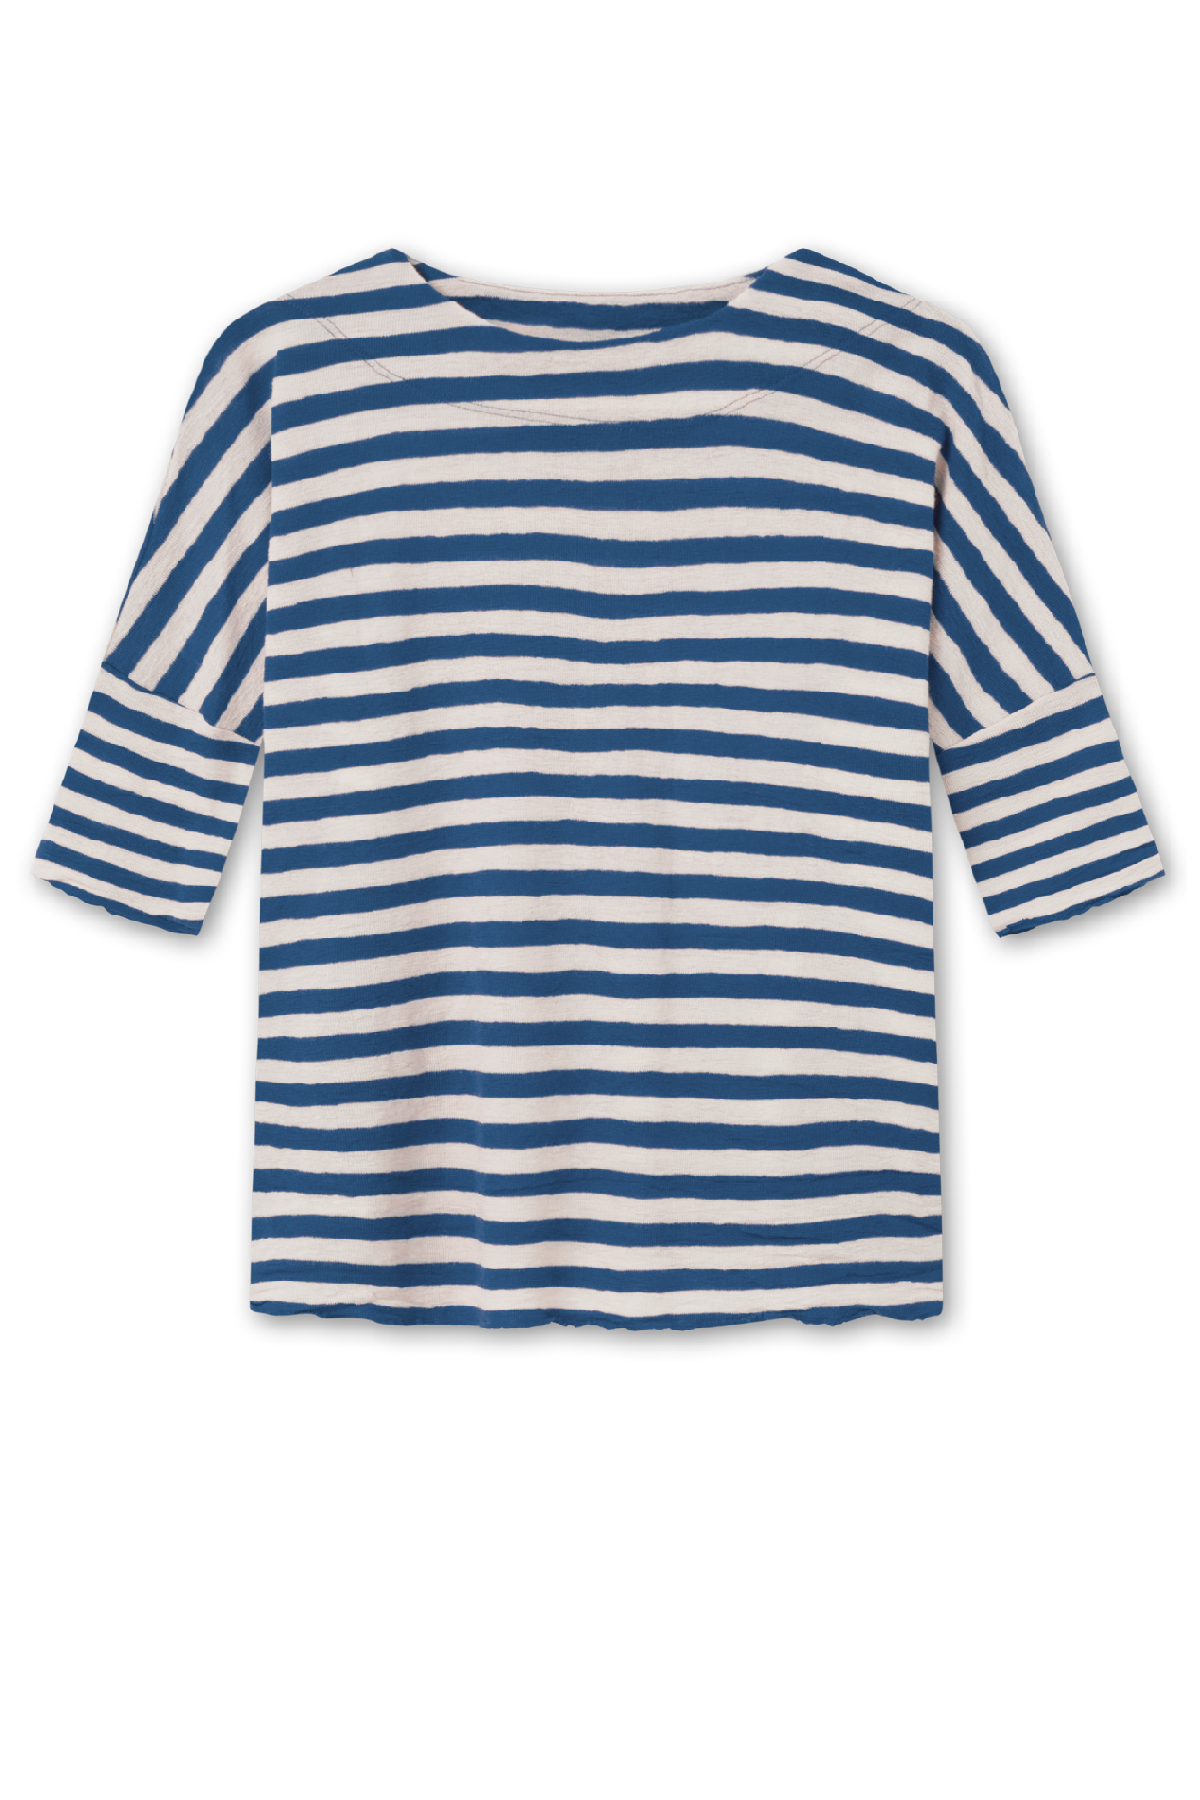 Blusbar by basic 4026 Wide shirt Wide S/S W/Boat neck, Raw White / Denim Blue